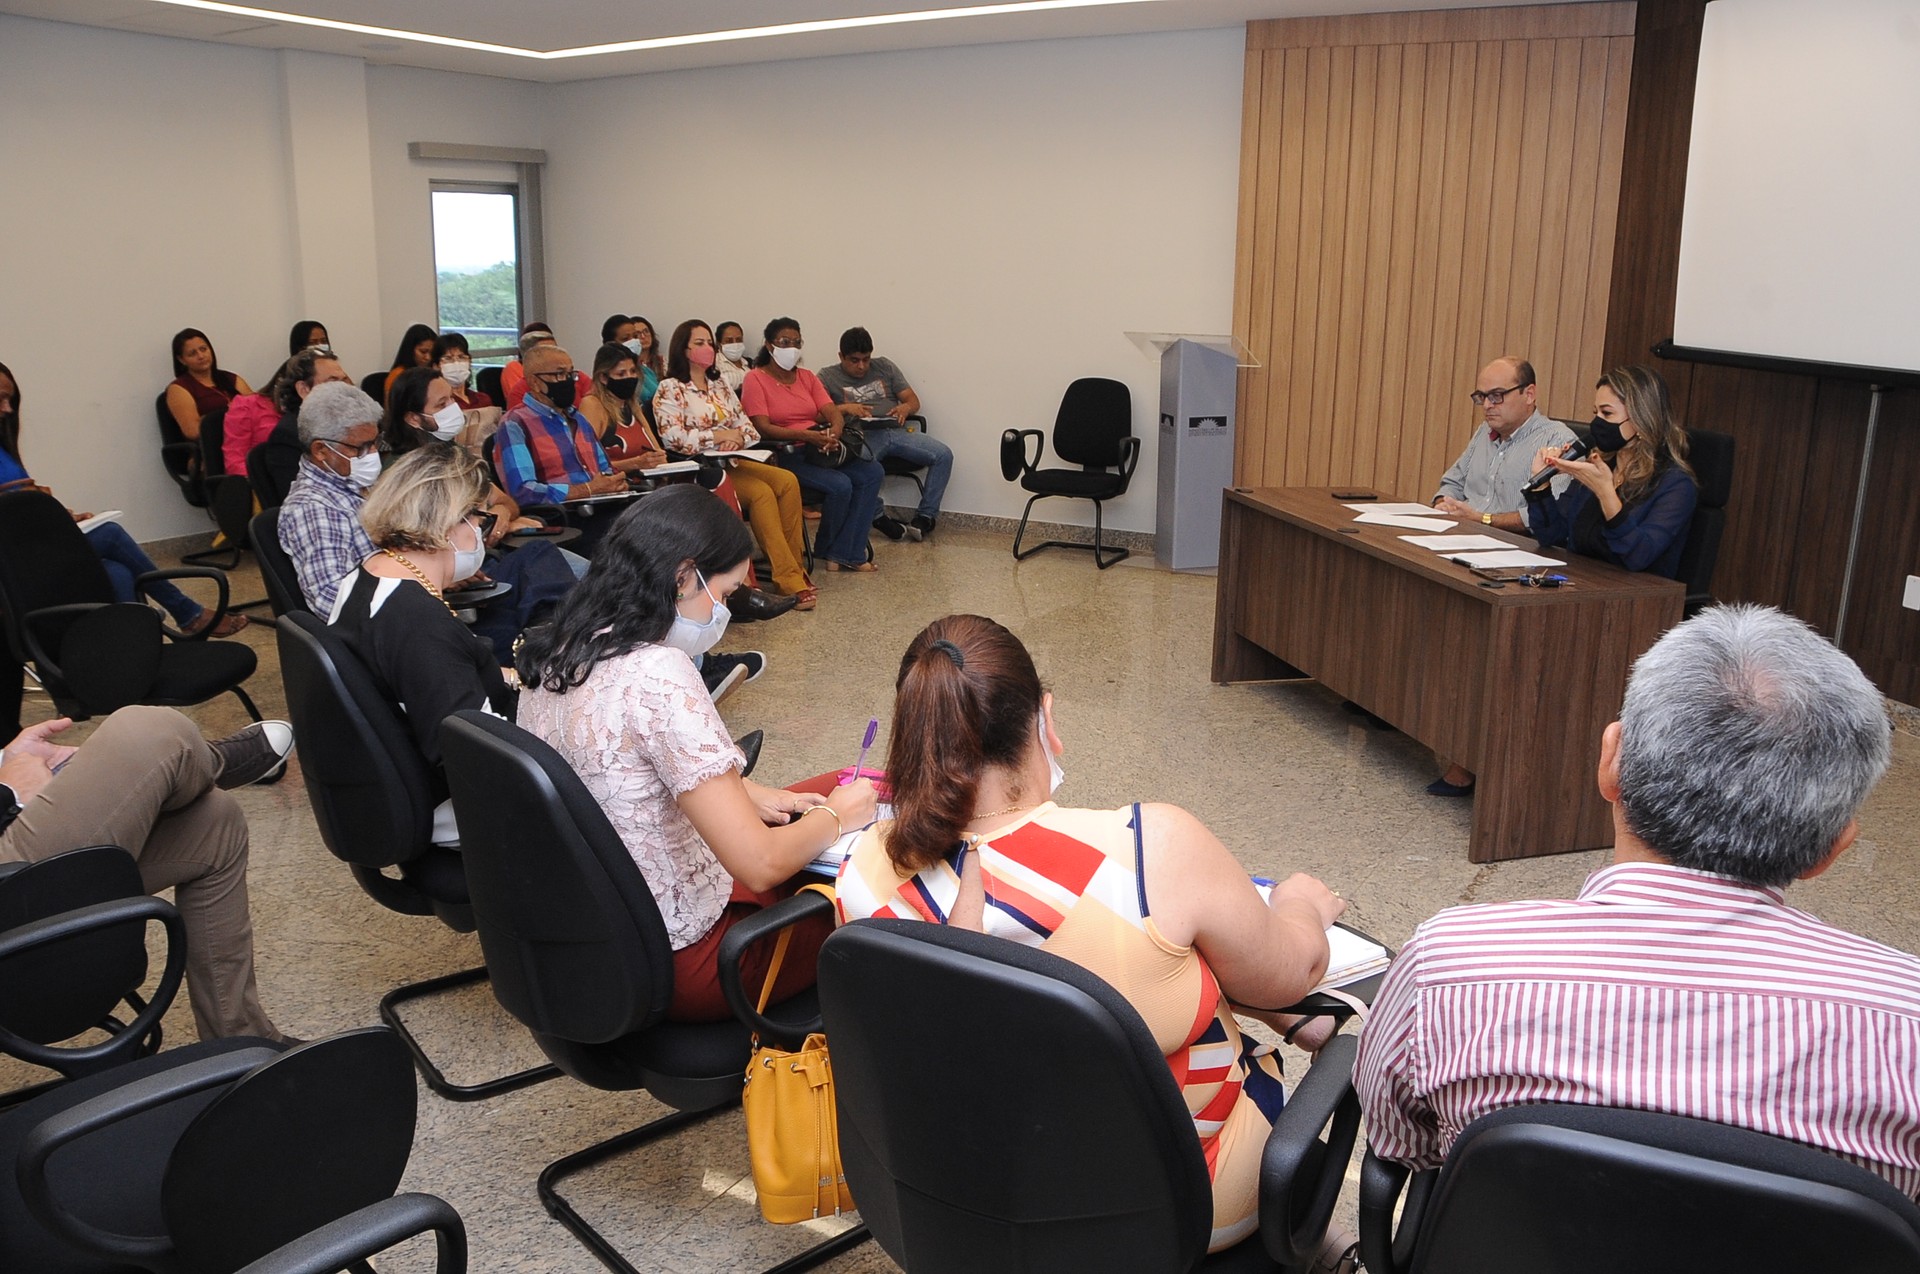 A audiência foi conduzida pela coordenadora do CaoSaúde, promotora de Justiça Araína Cesárea, e pelo promotor de Justiça Benedicto Guedes